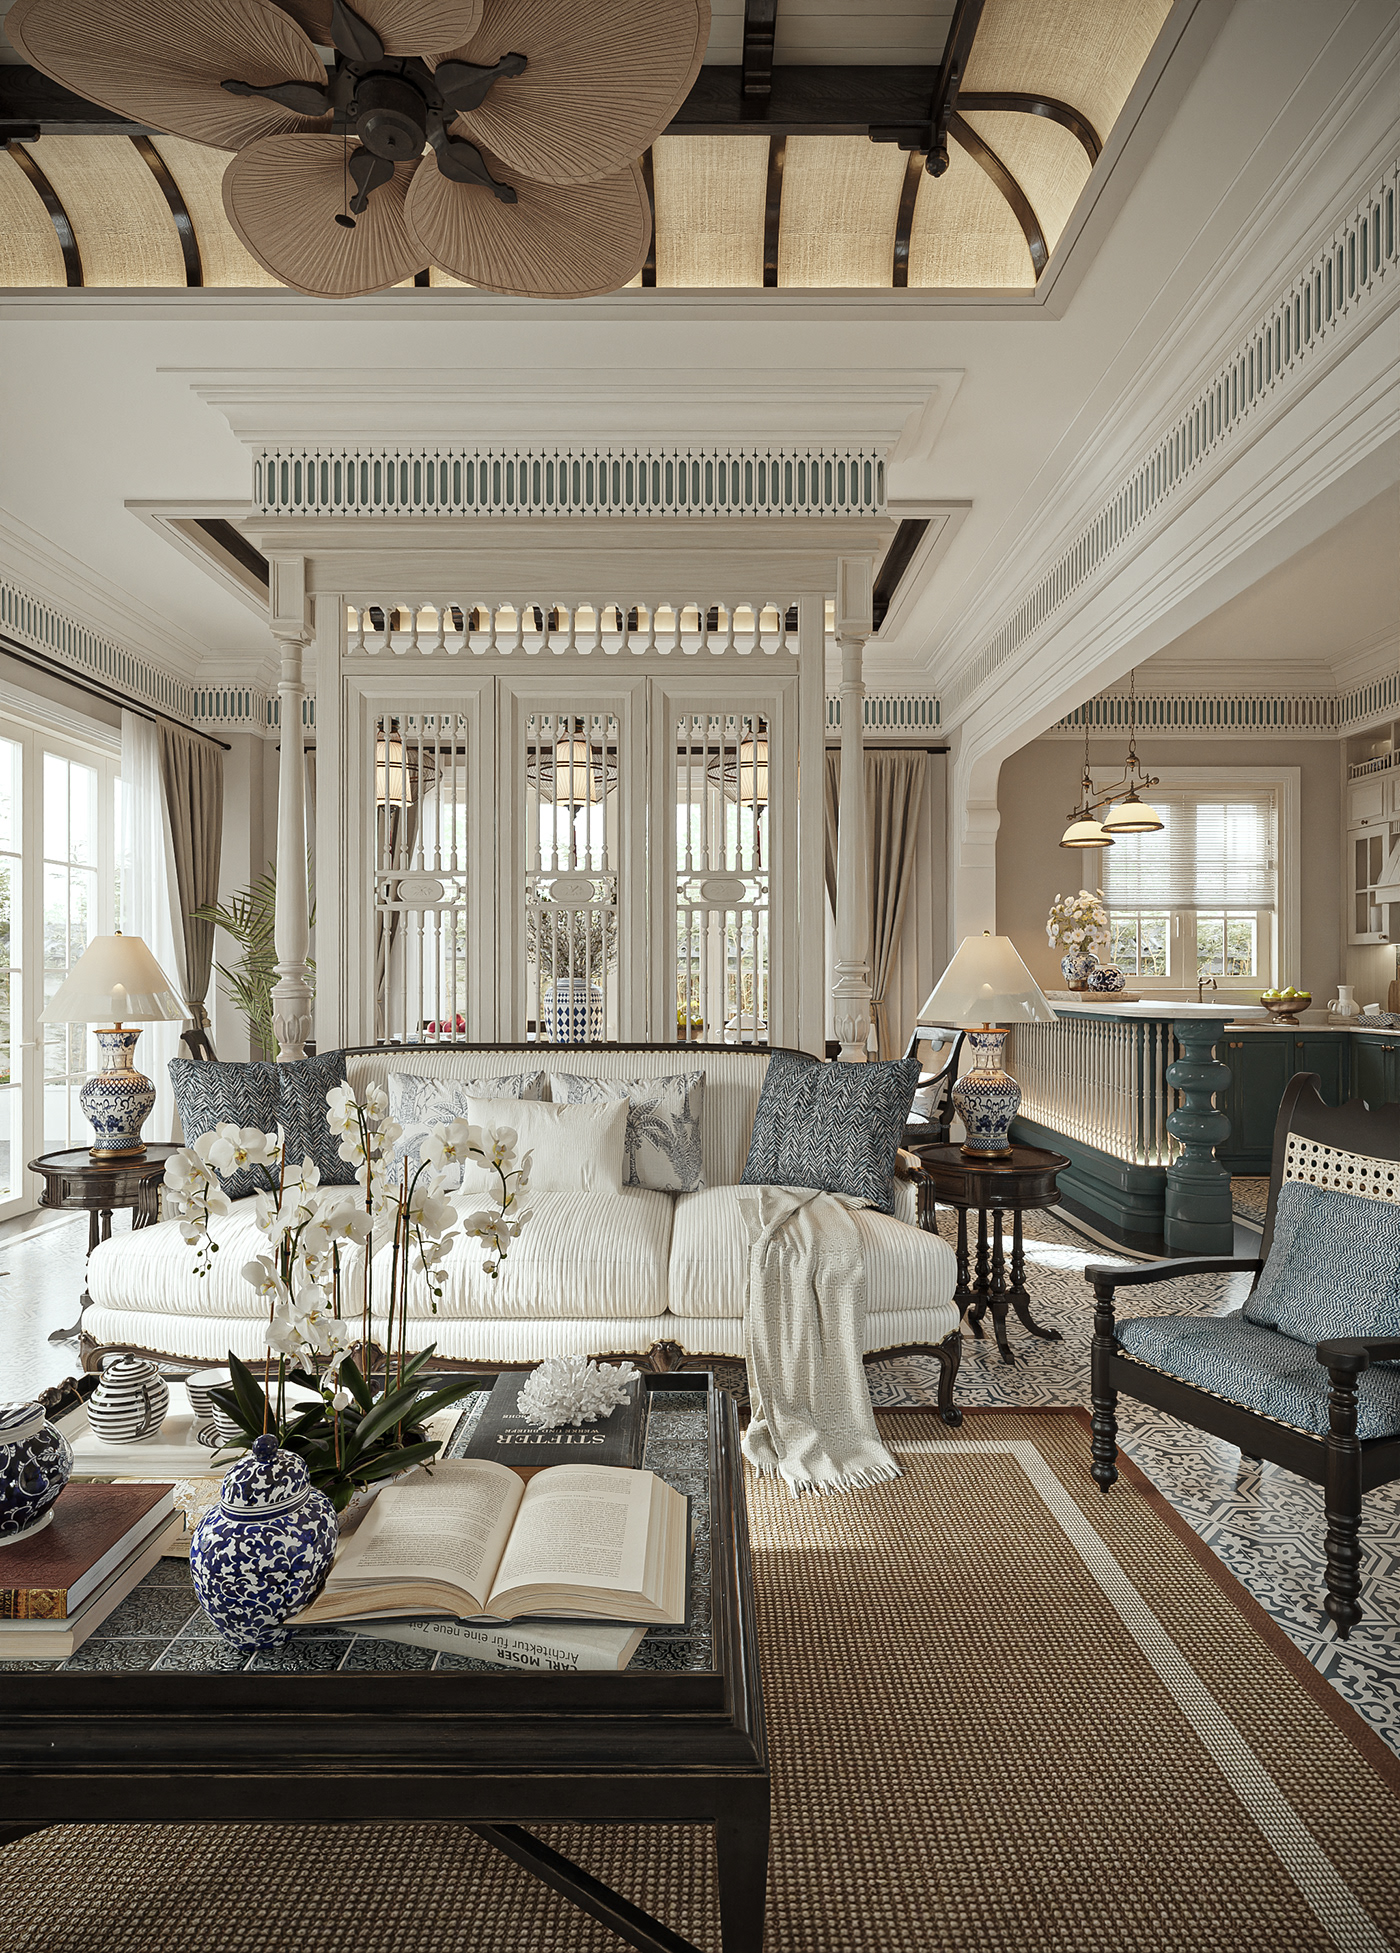 3ds max corona render  indochine living room Villa indochine style chinoiserie design Behance Indochine interior